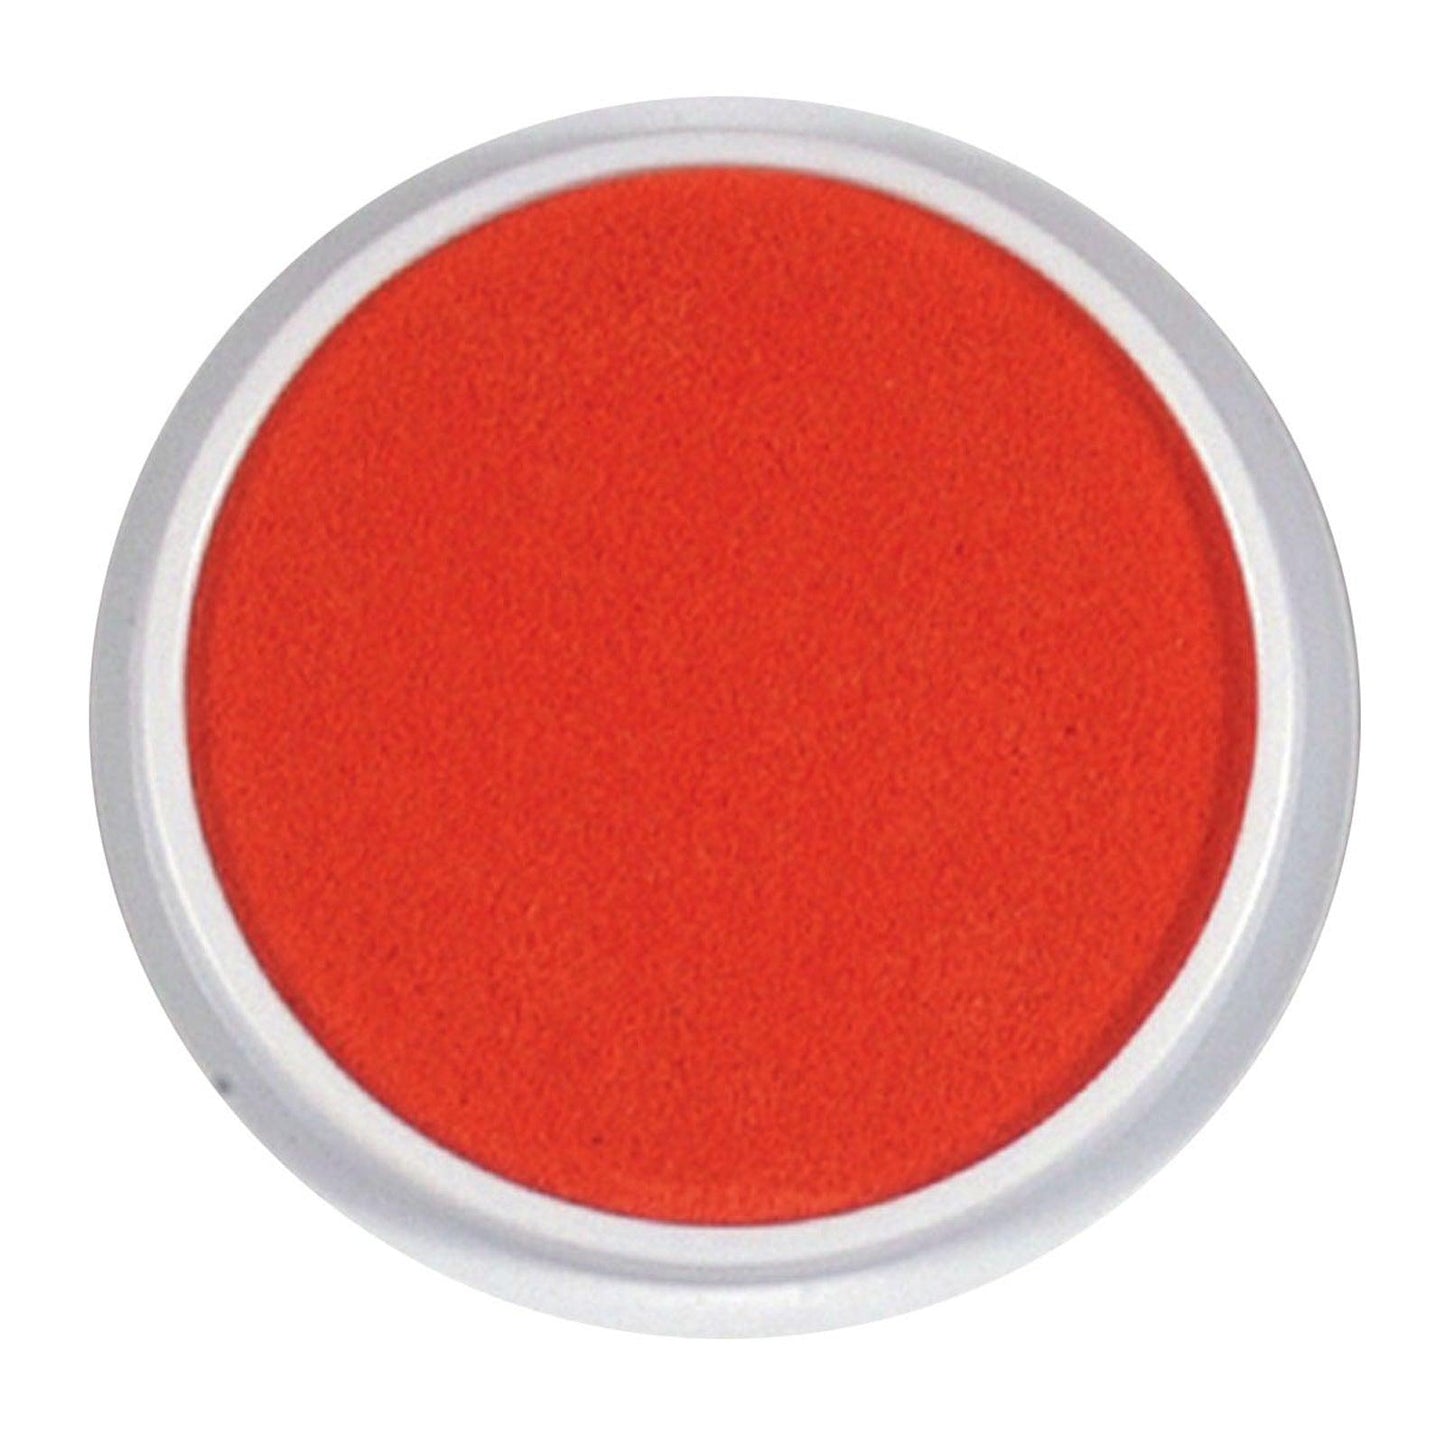 Jumbo Circular Washable Stamp Pad - Orange - 5.75" dia. - Pack of 6 - Loomini